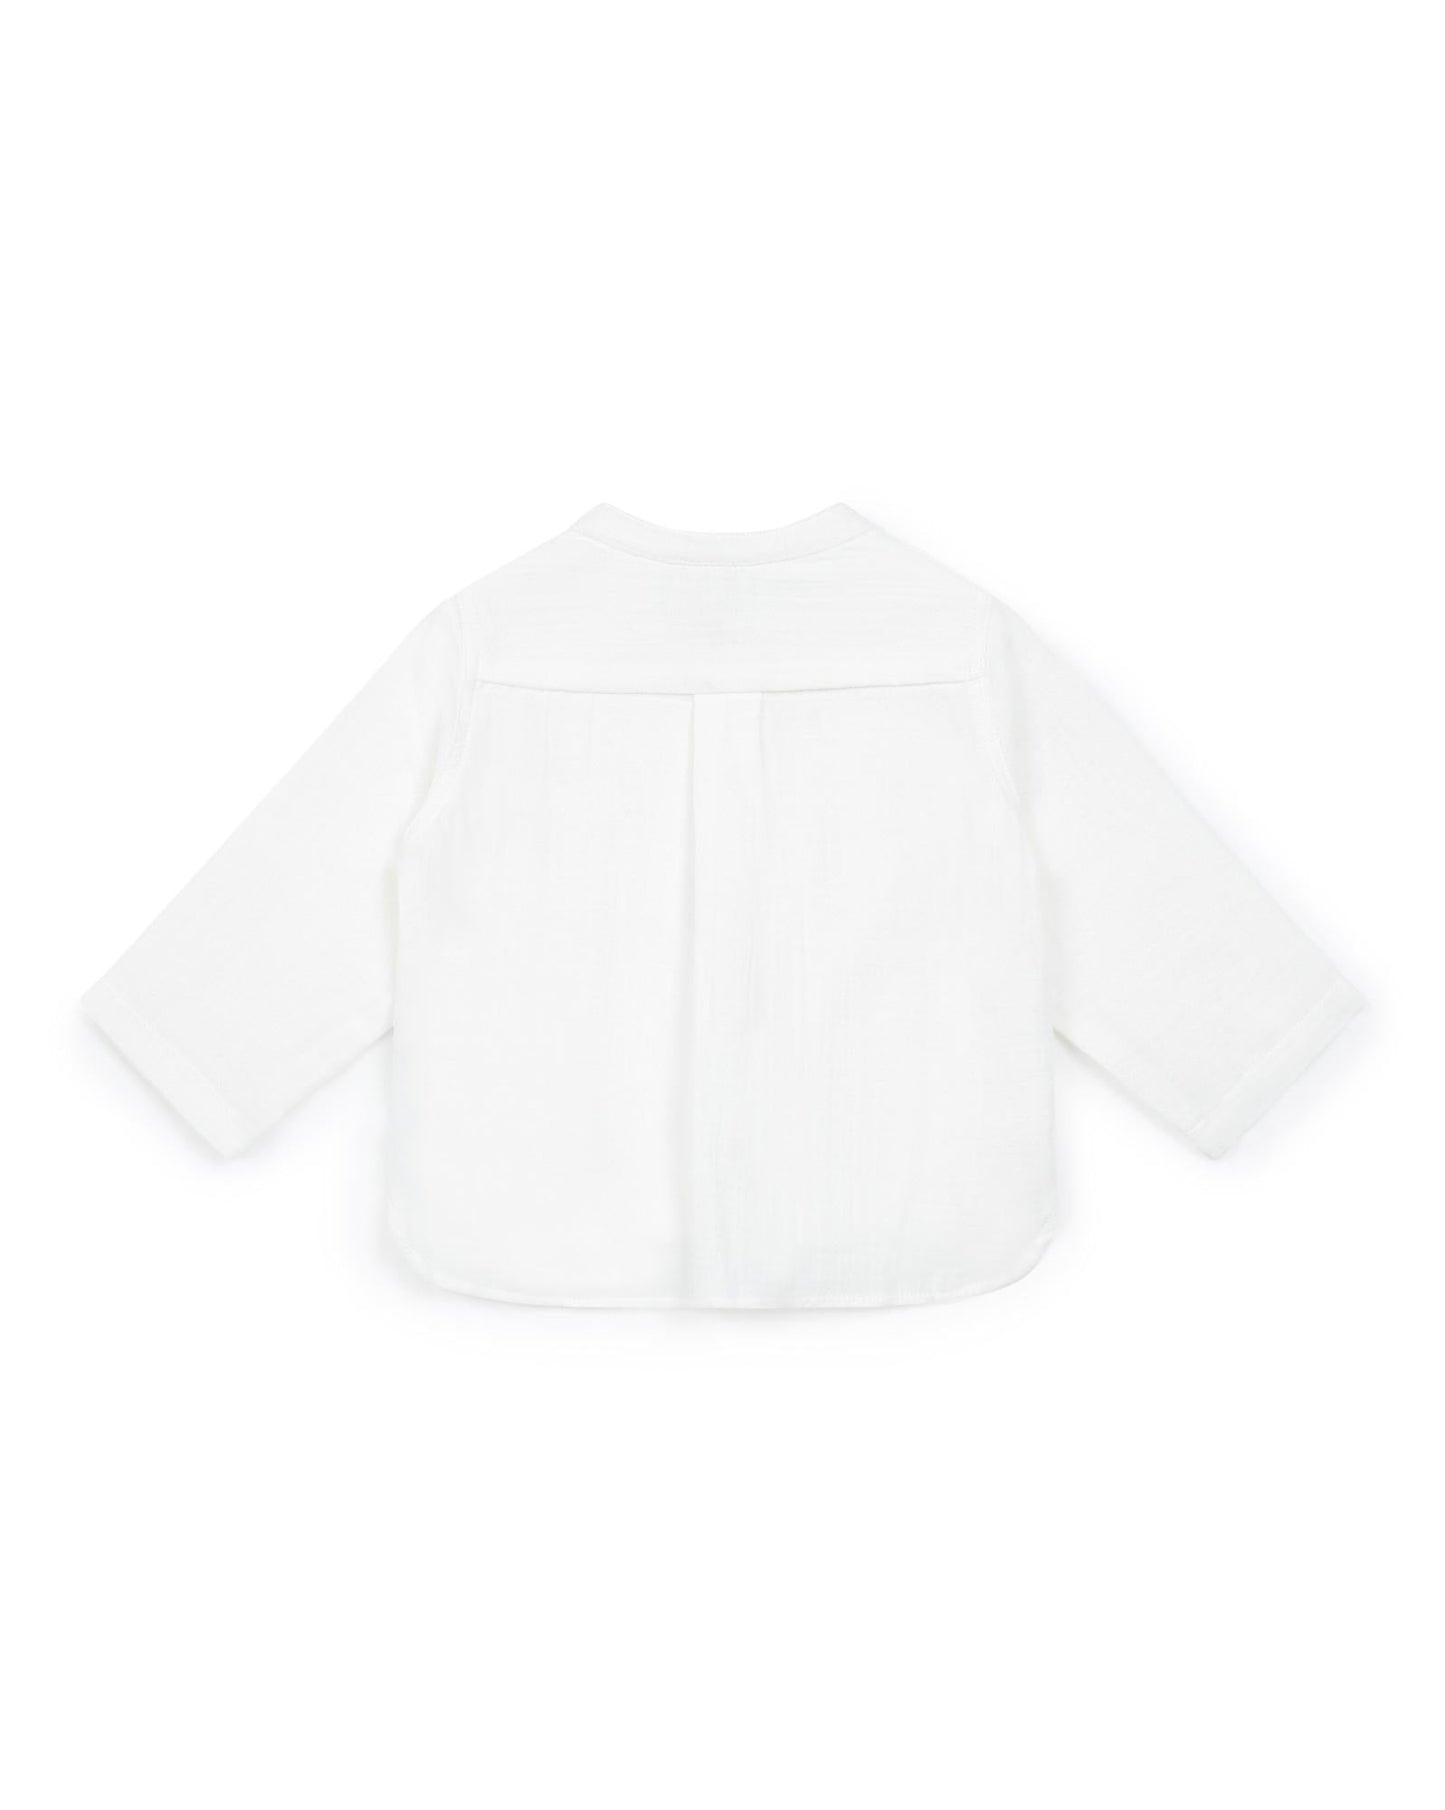 Shirt Matt Beige Baby In 100% organic cotton gauze certified GOTS